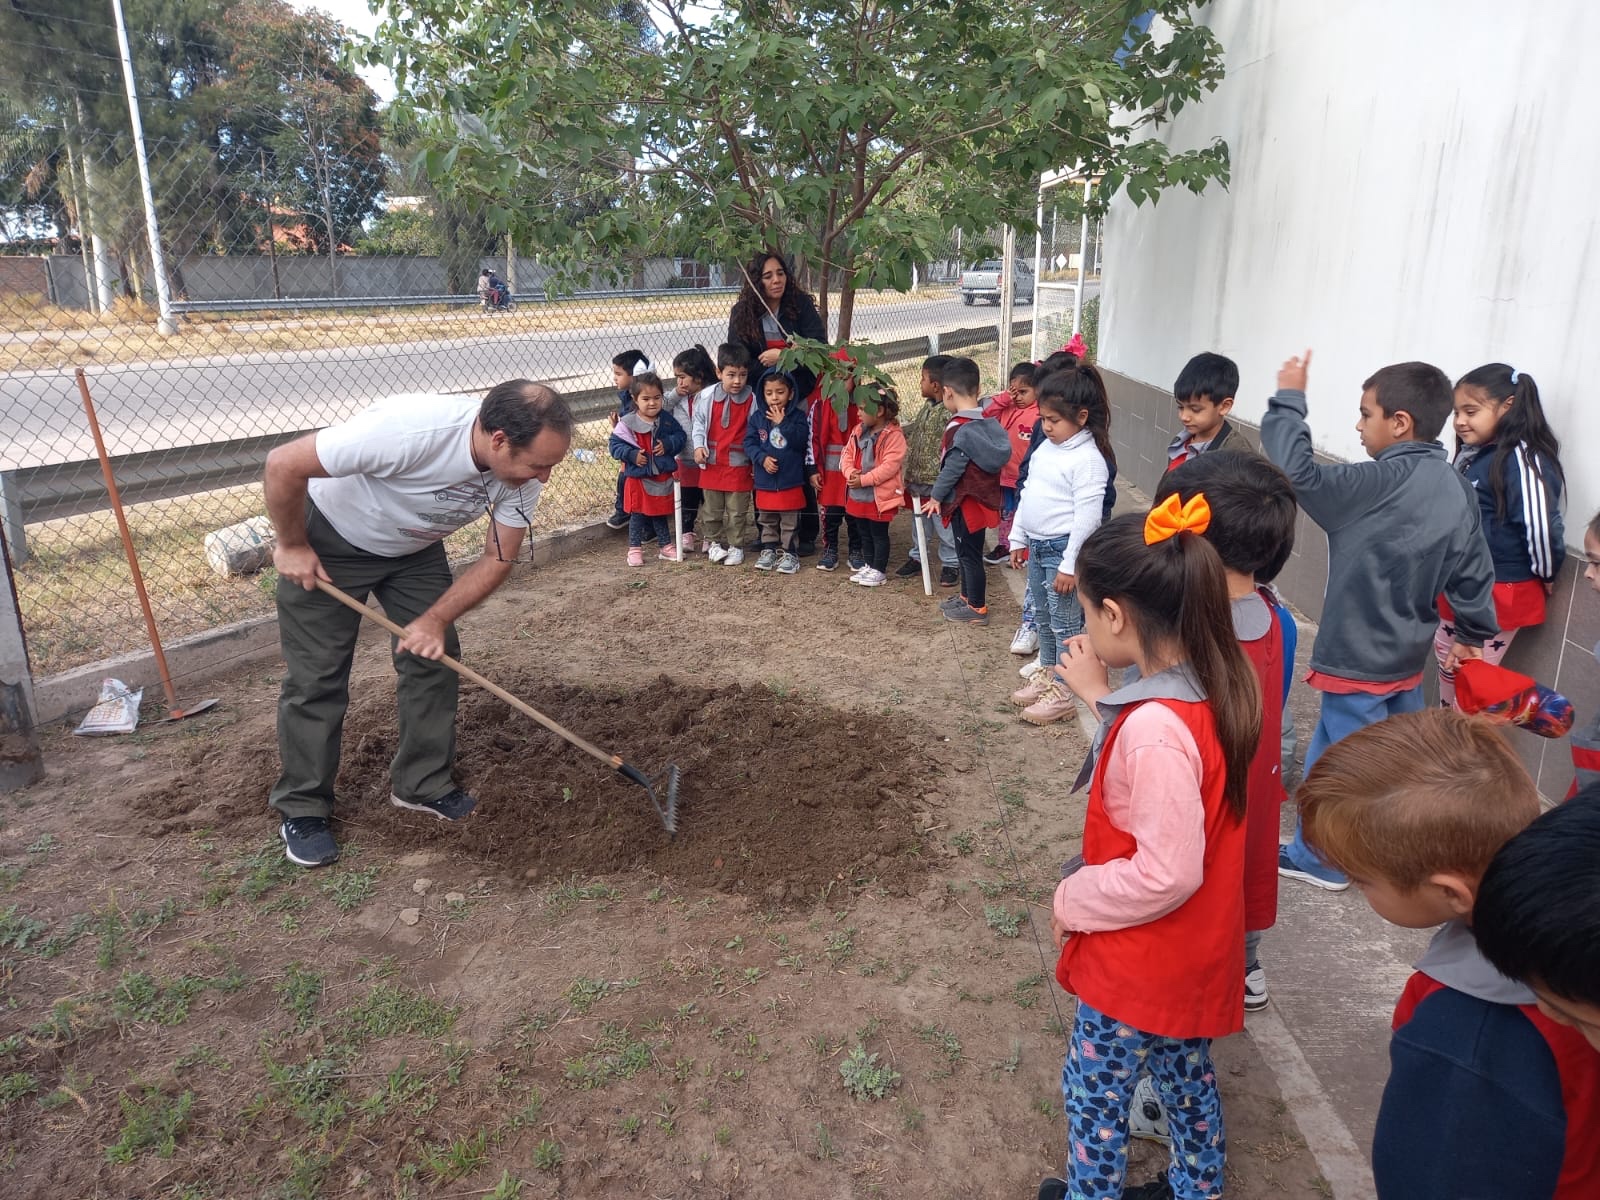 El jardín de infantes “Carrousell” inició su propia huerta con ayuda del municipio